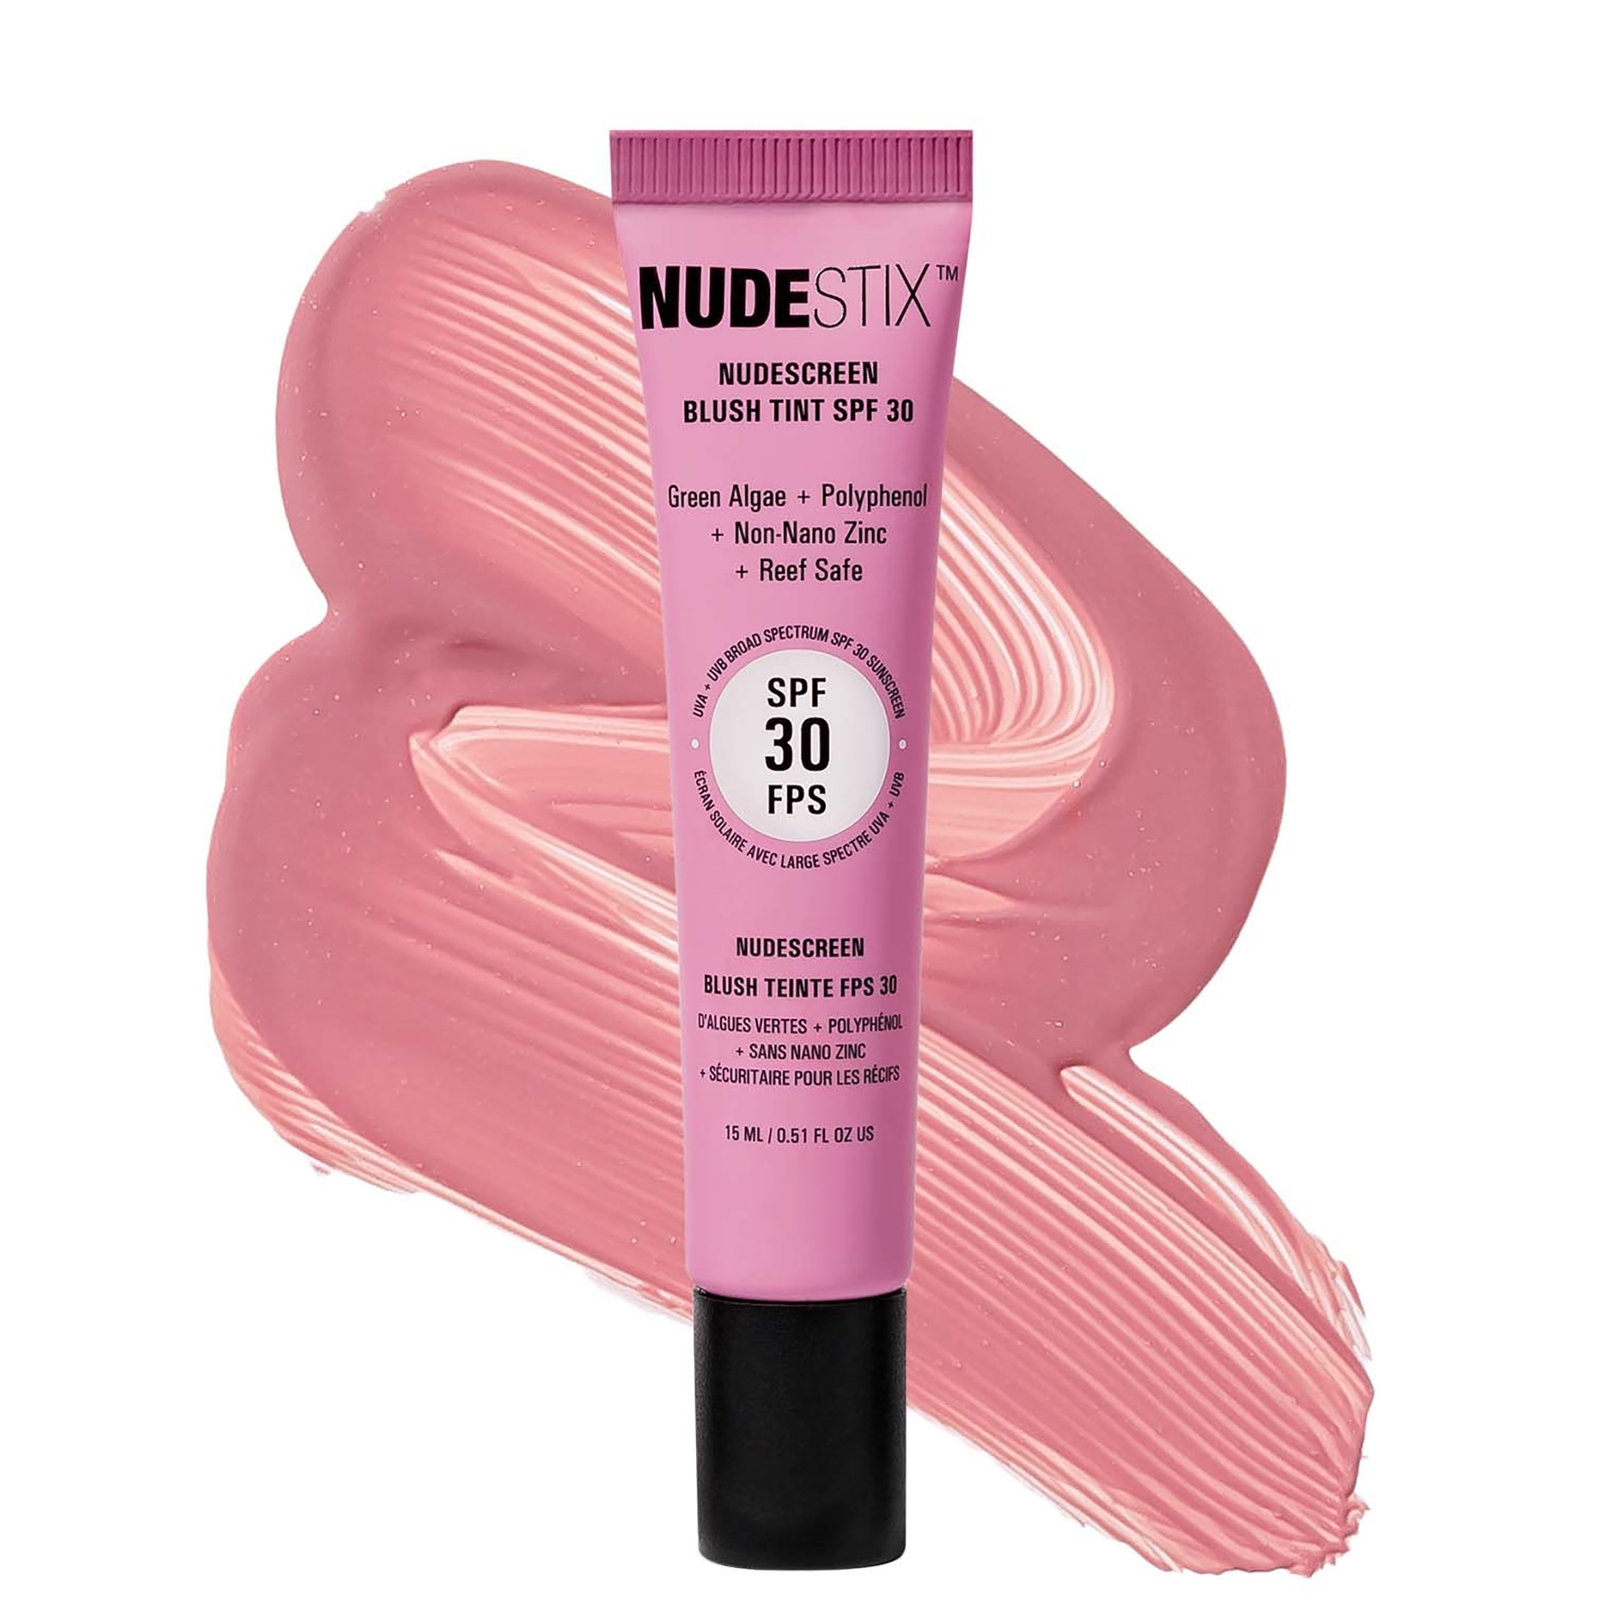 Nudestix Nudescreen Blush Tint Spf 30 15ml (various Shades) - Sunset Rose In White